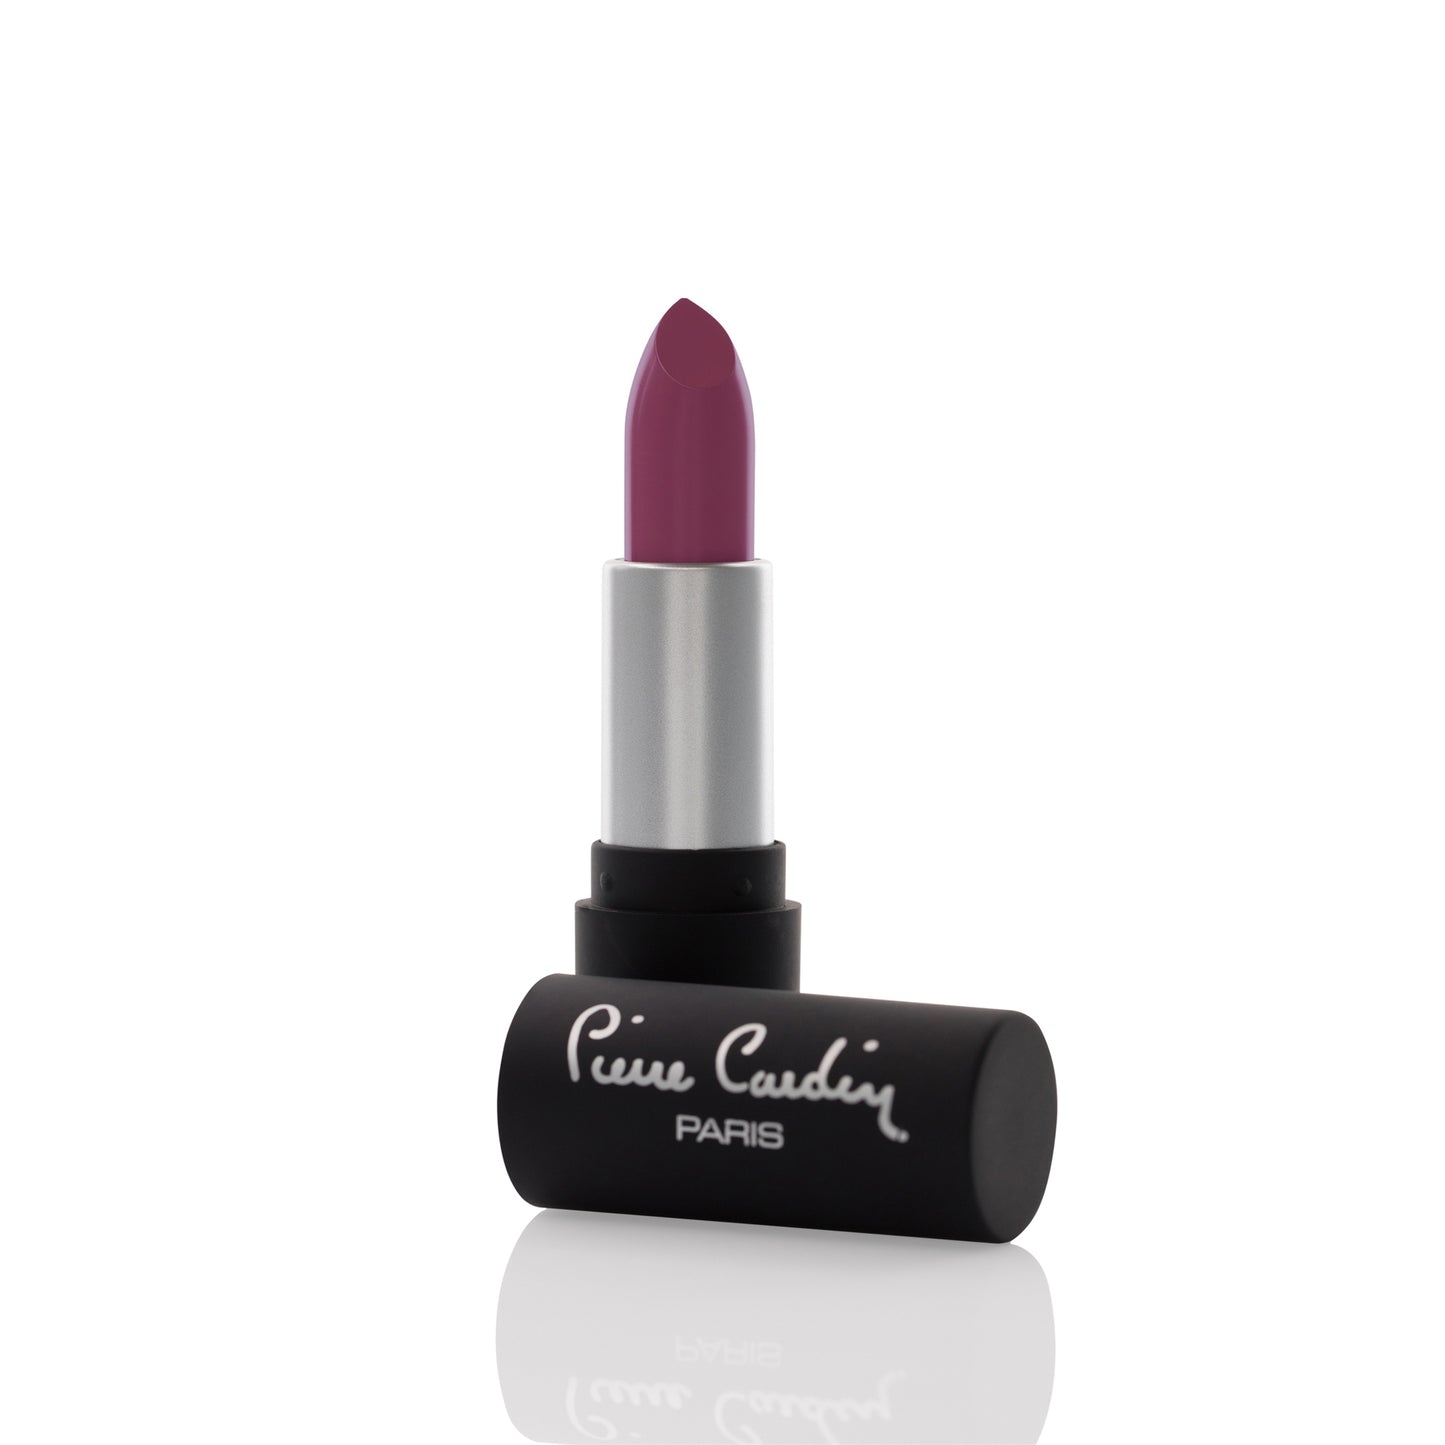 Pierre Cardin Matte Chiffon Touch Lipstick  Plummy Red 190 - 4 gr